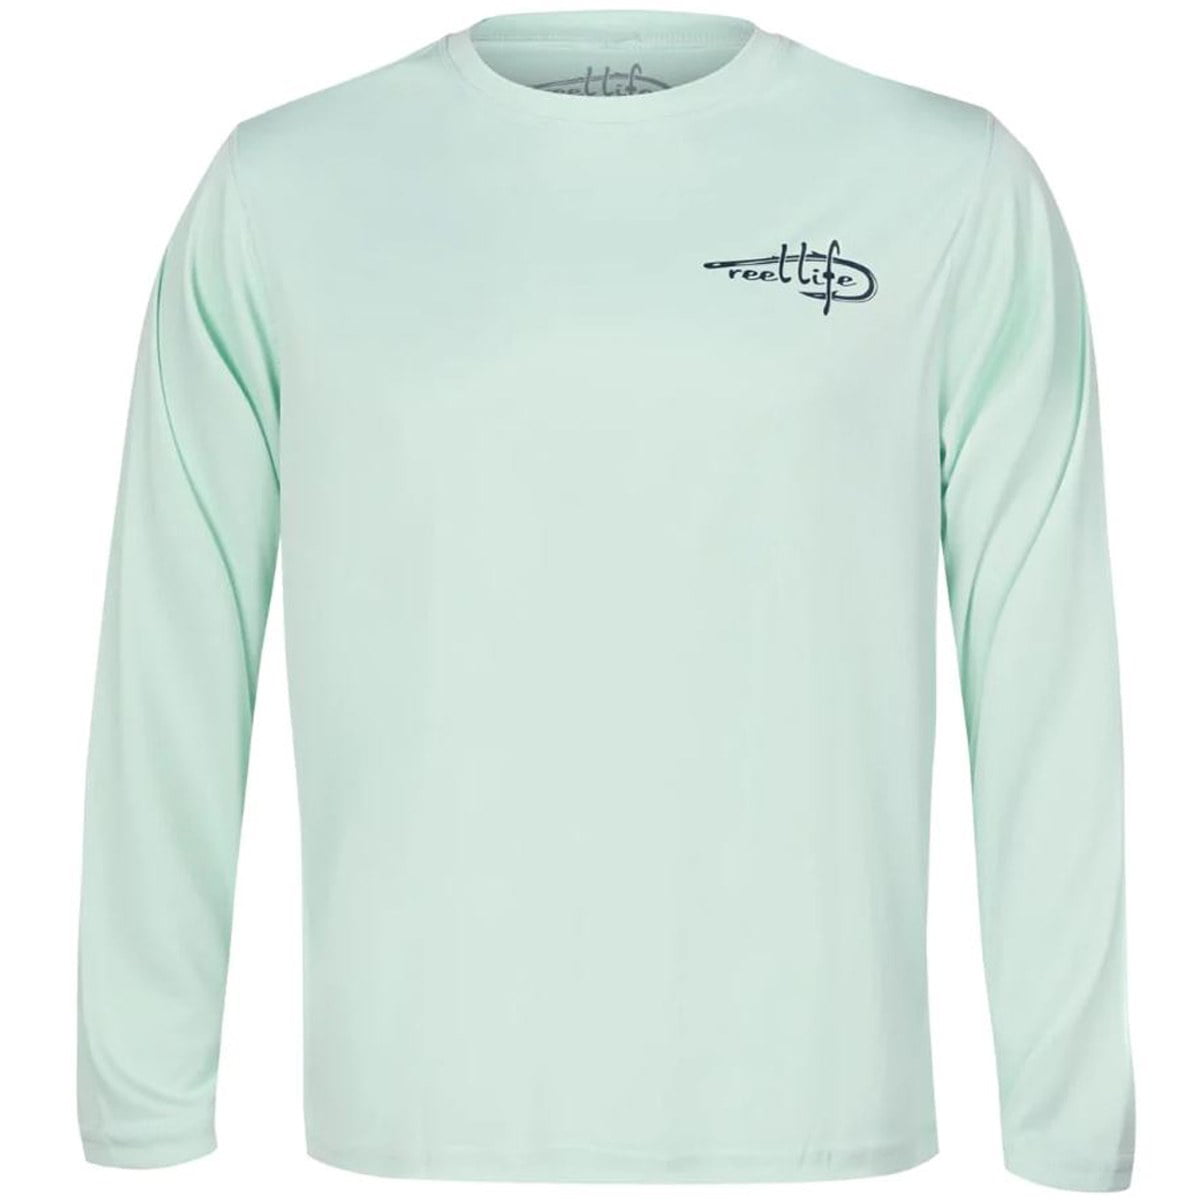 Reel Life Color Splash Sail UV Long Sleeve T-Shirt - Small - Misty Jade 